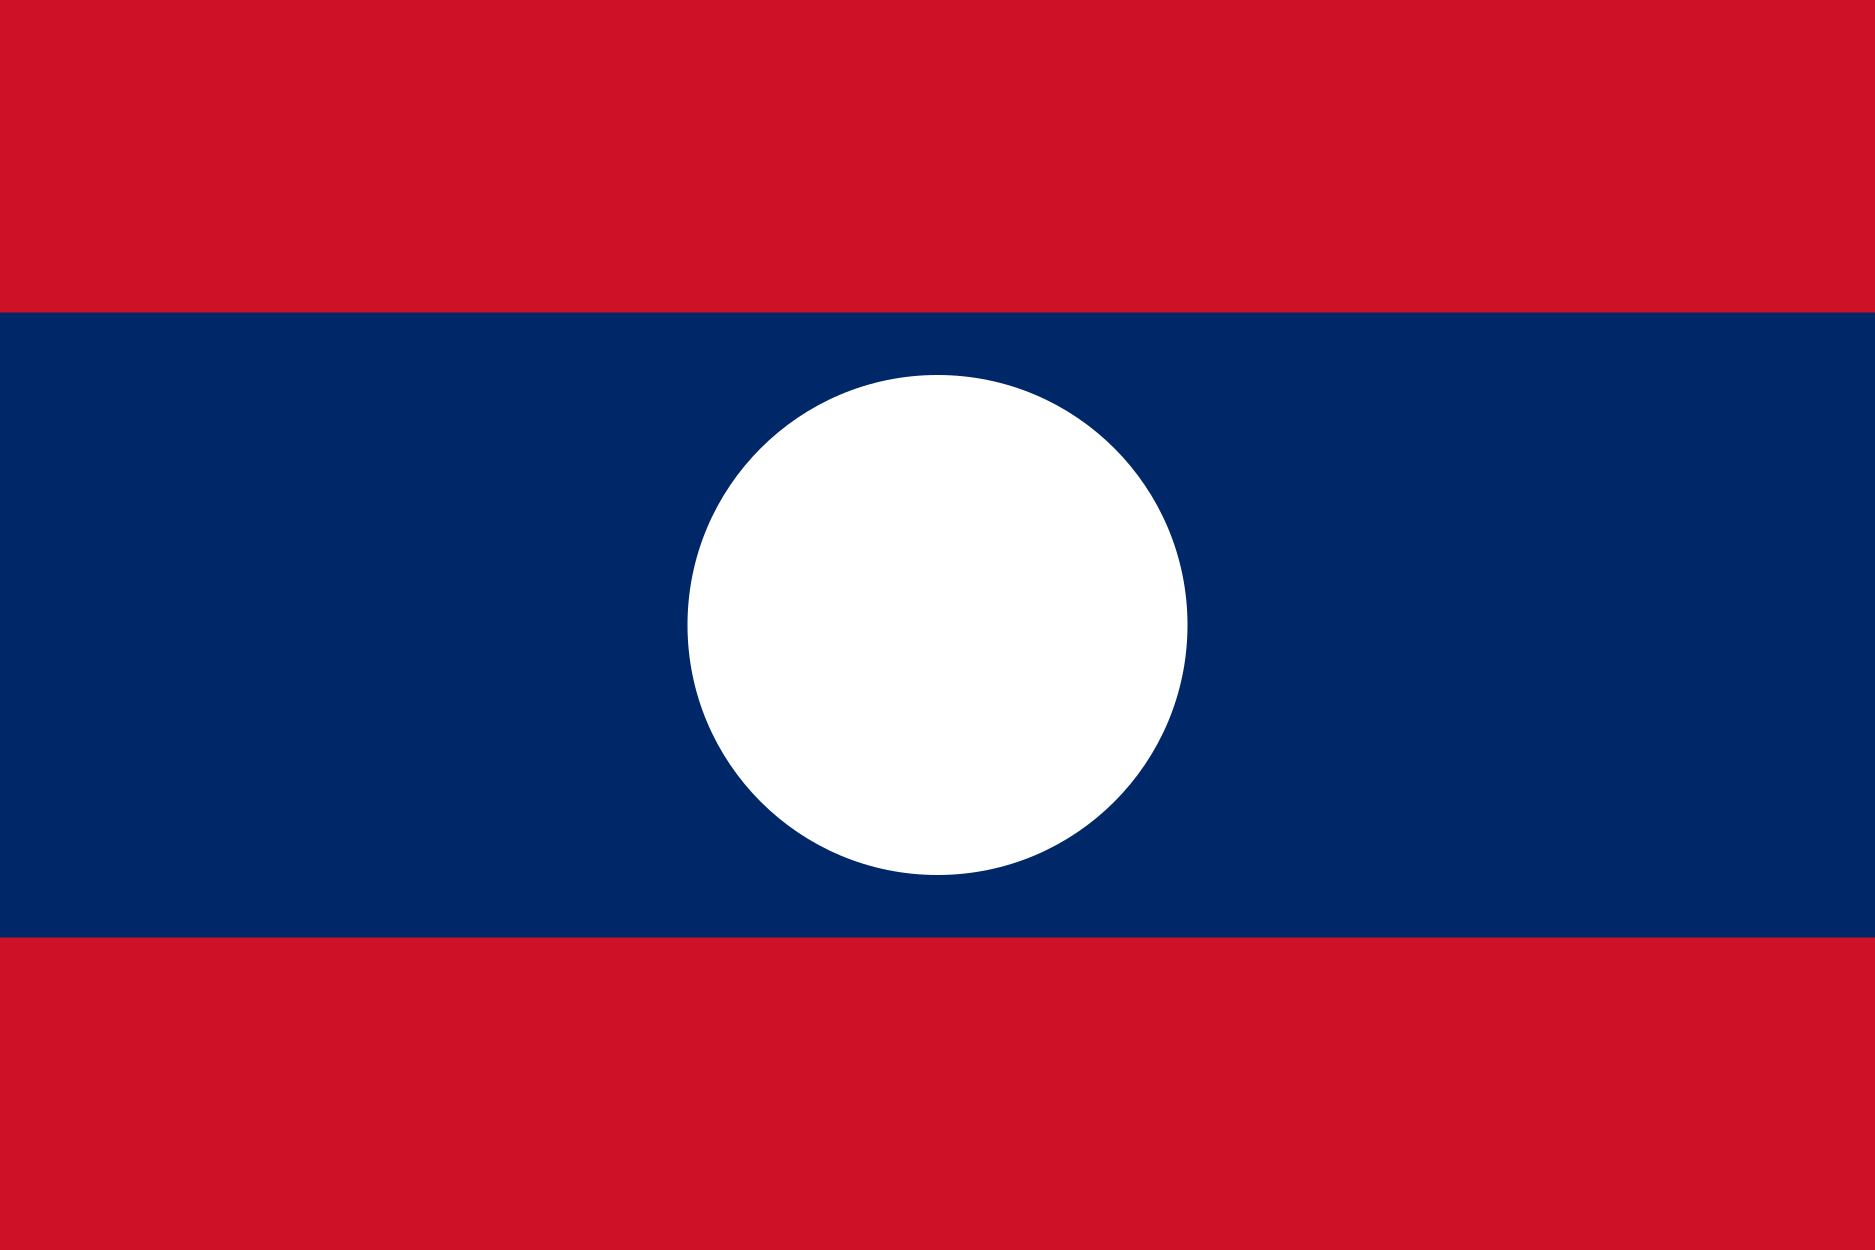 Free Laos Flag Documents: PDF, DOC, DOCX, HTML & More!